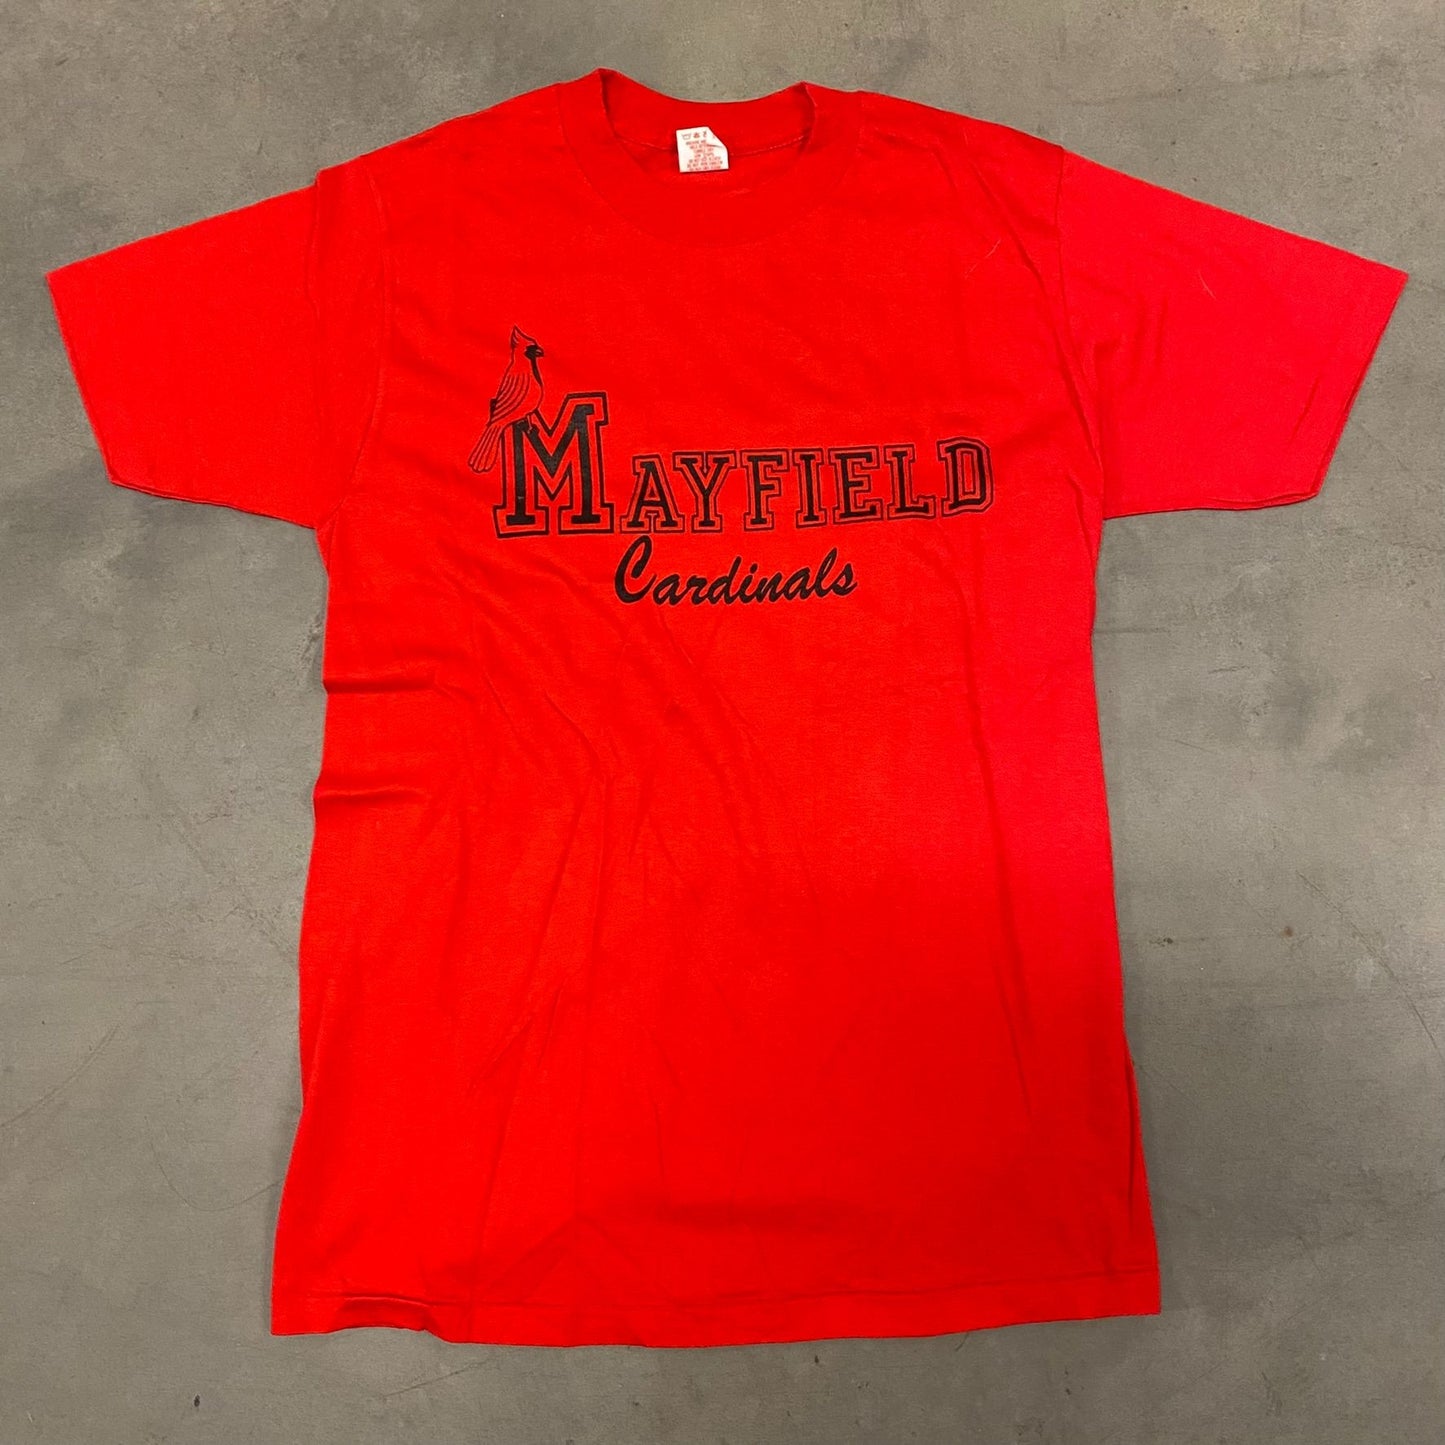 Mayfield Cardinals Vintage 80s T-Shirt